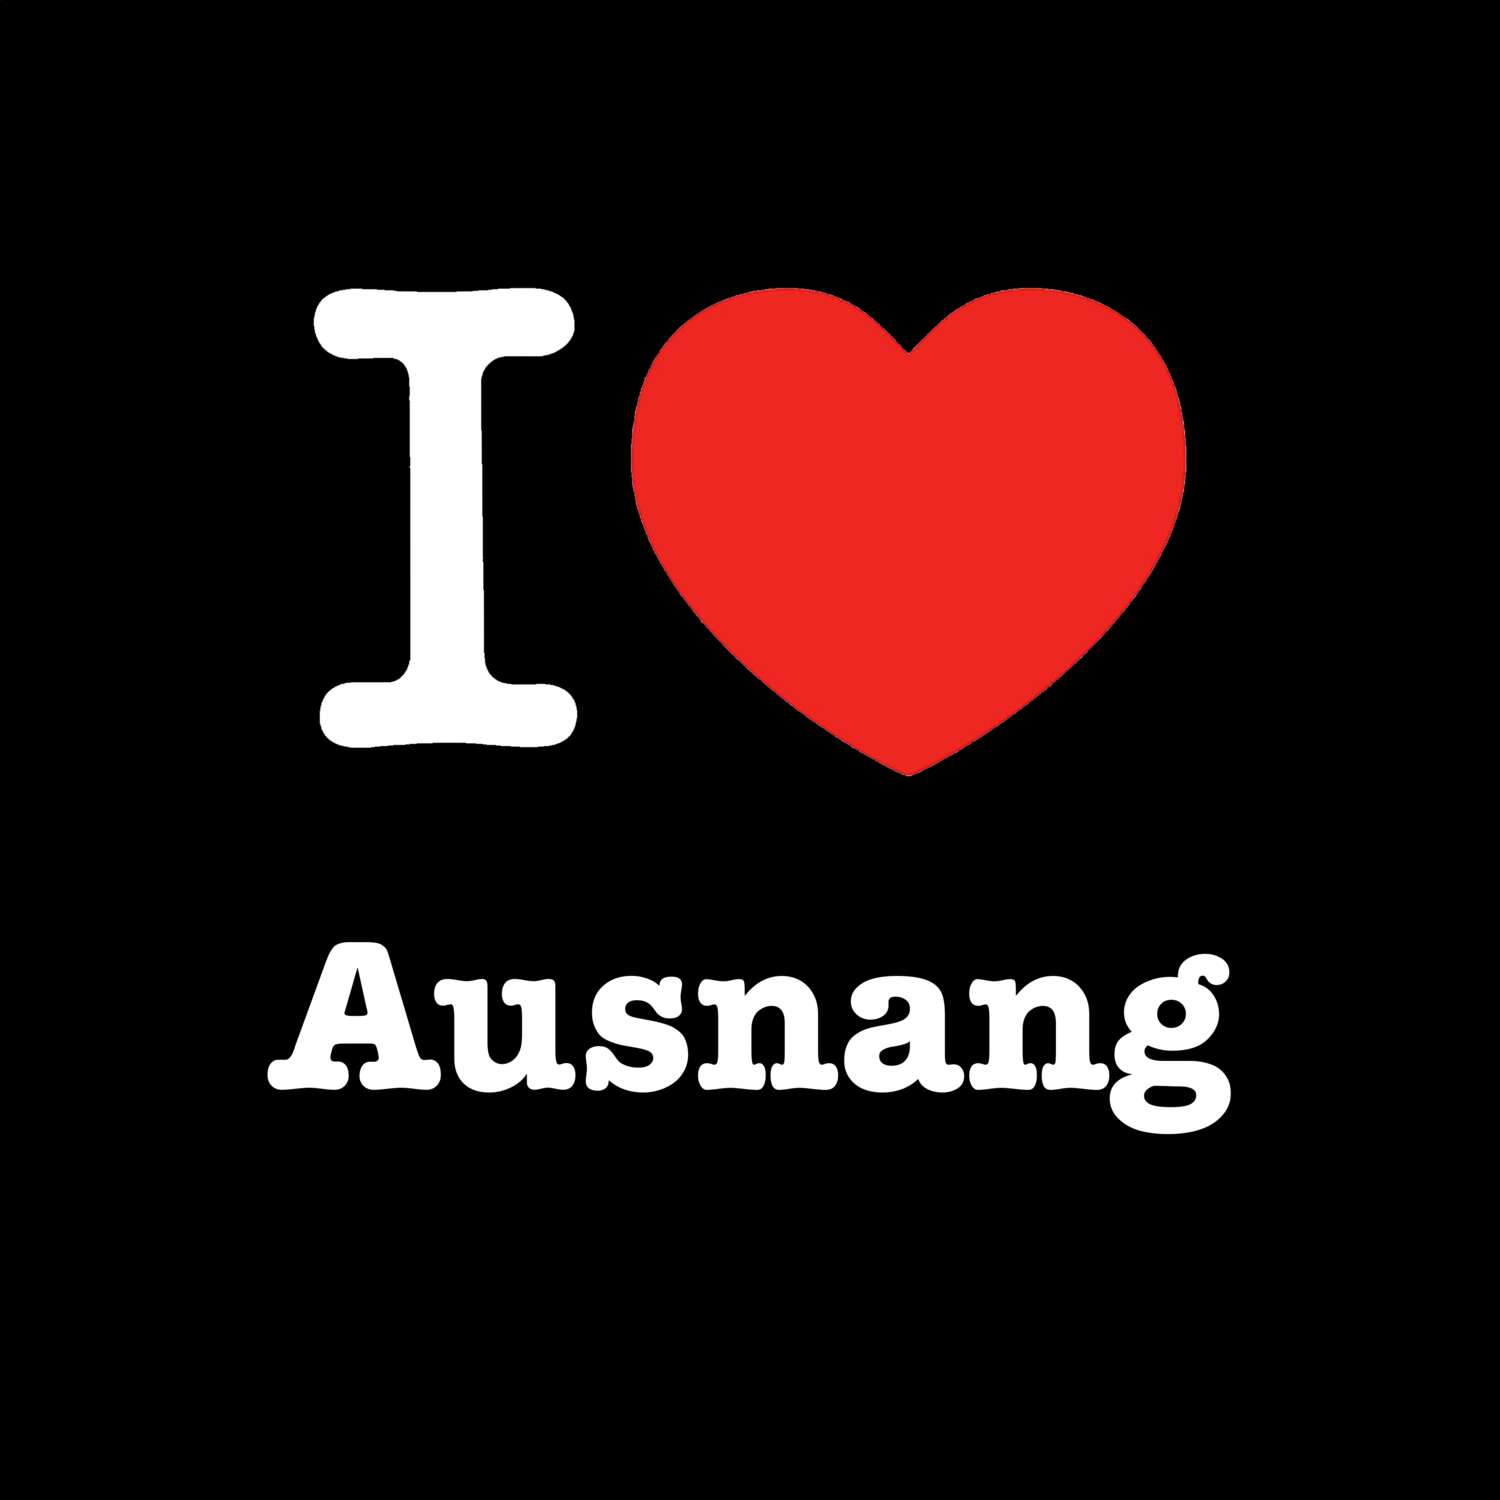 Ausnang T-Shirt »I love«